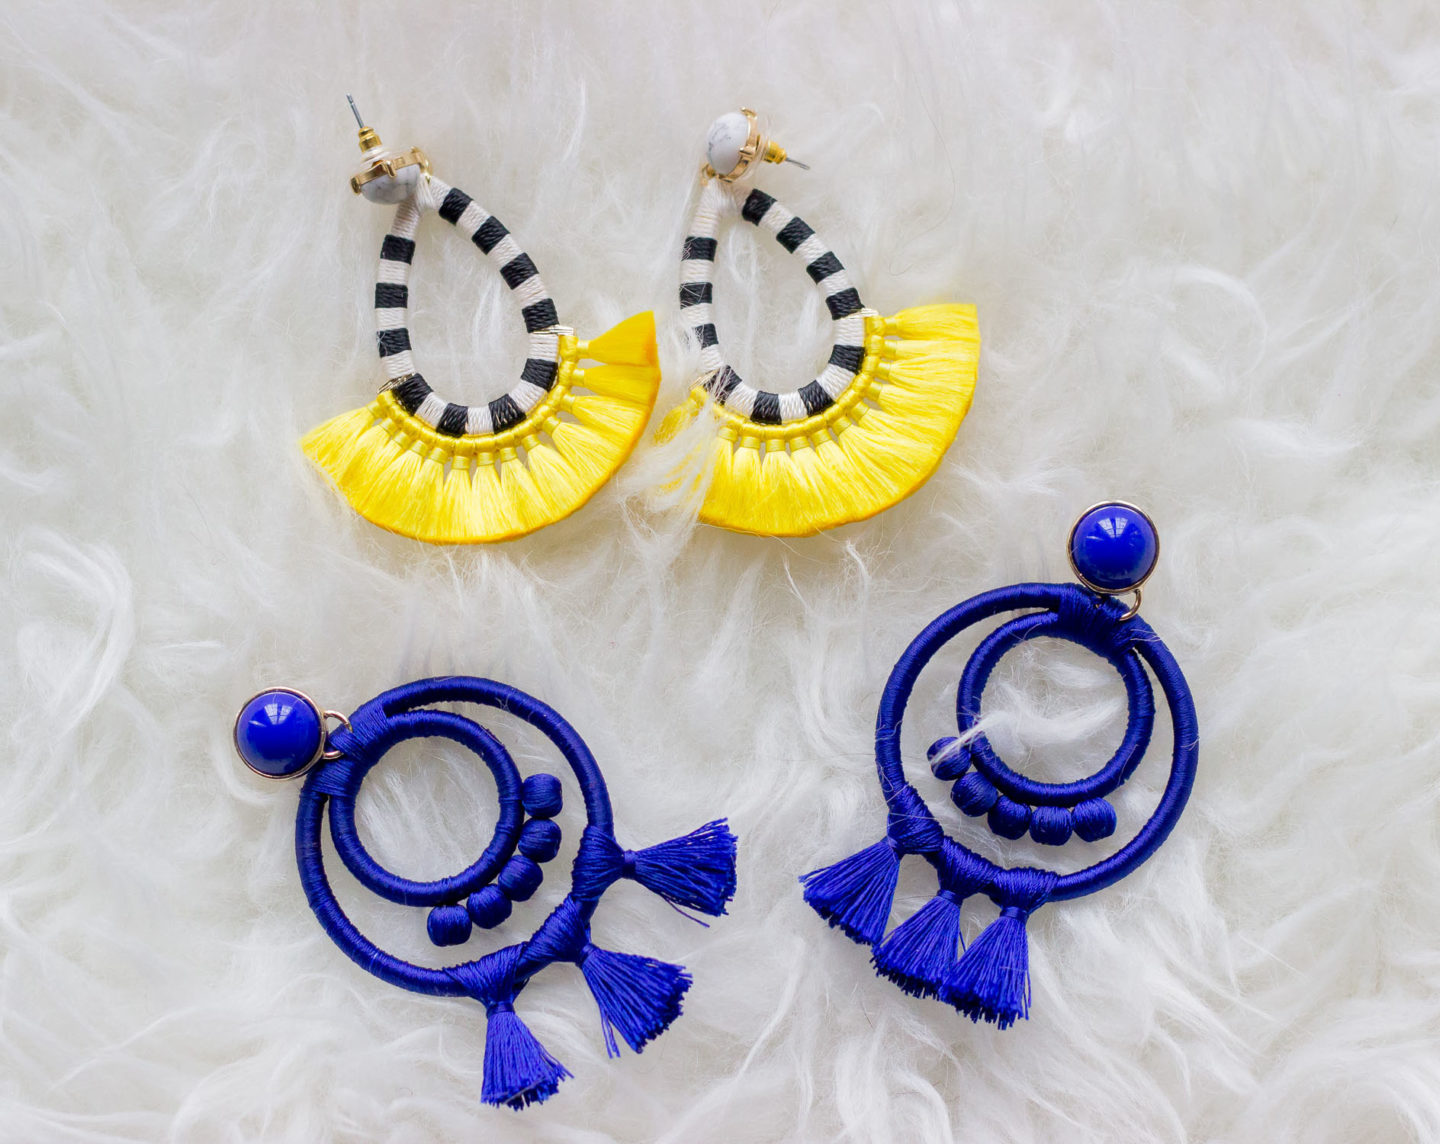 Statement earrings worn by Elise Giannasi on Belle Meets World blog